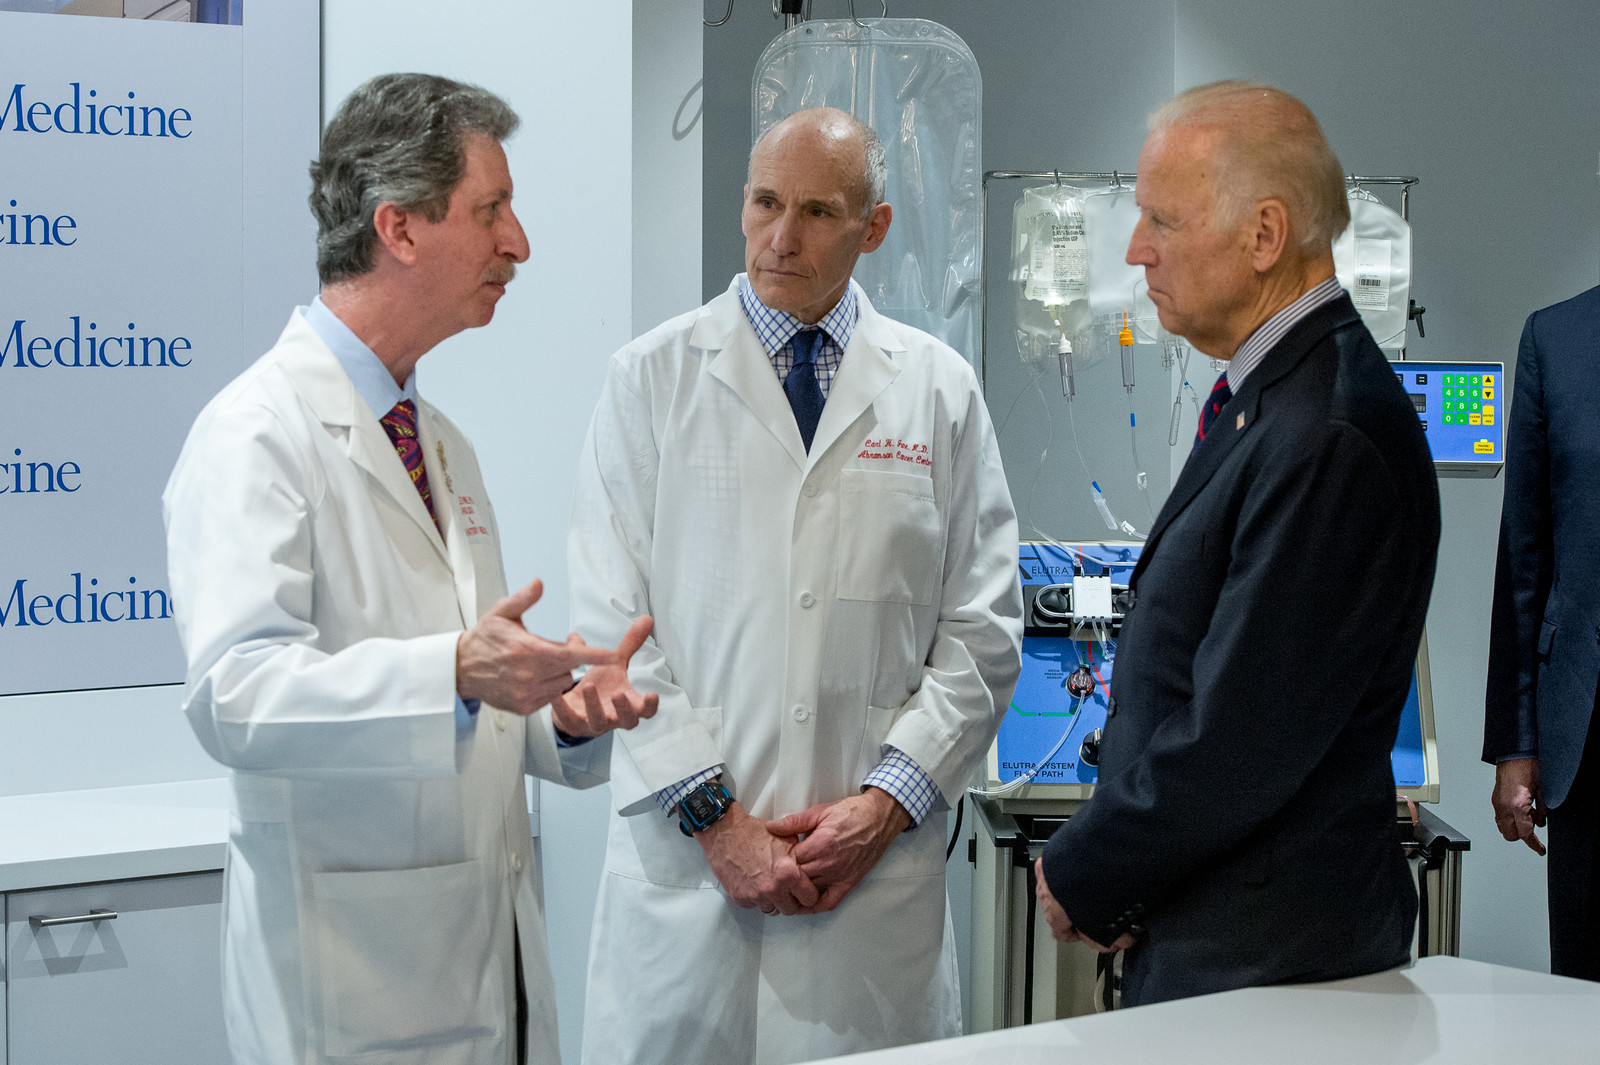 Biden at Cancer Center